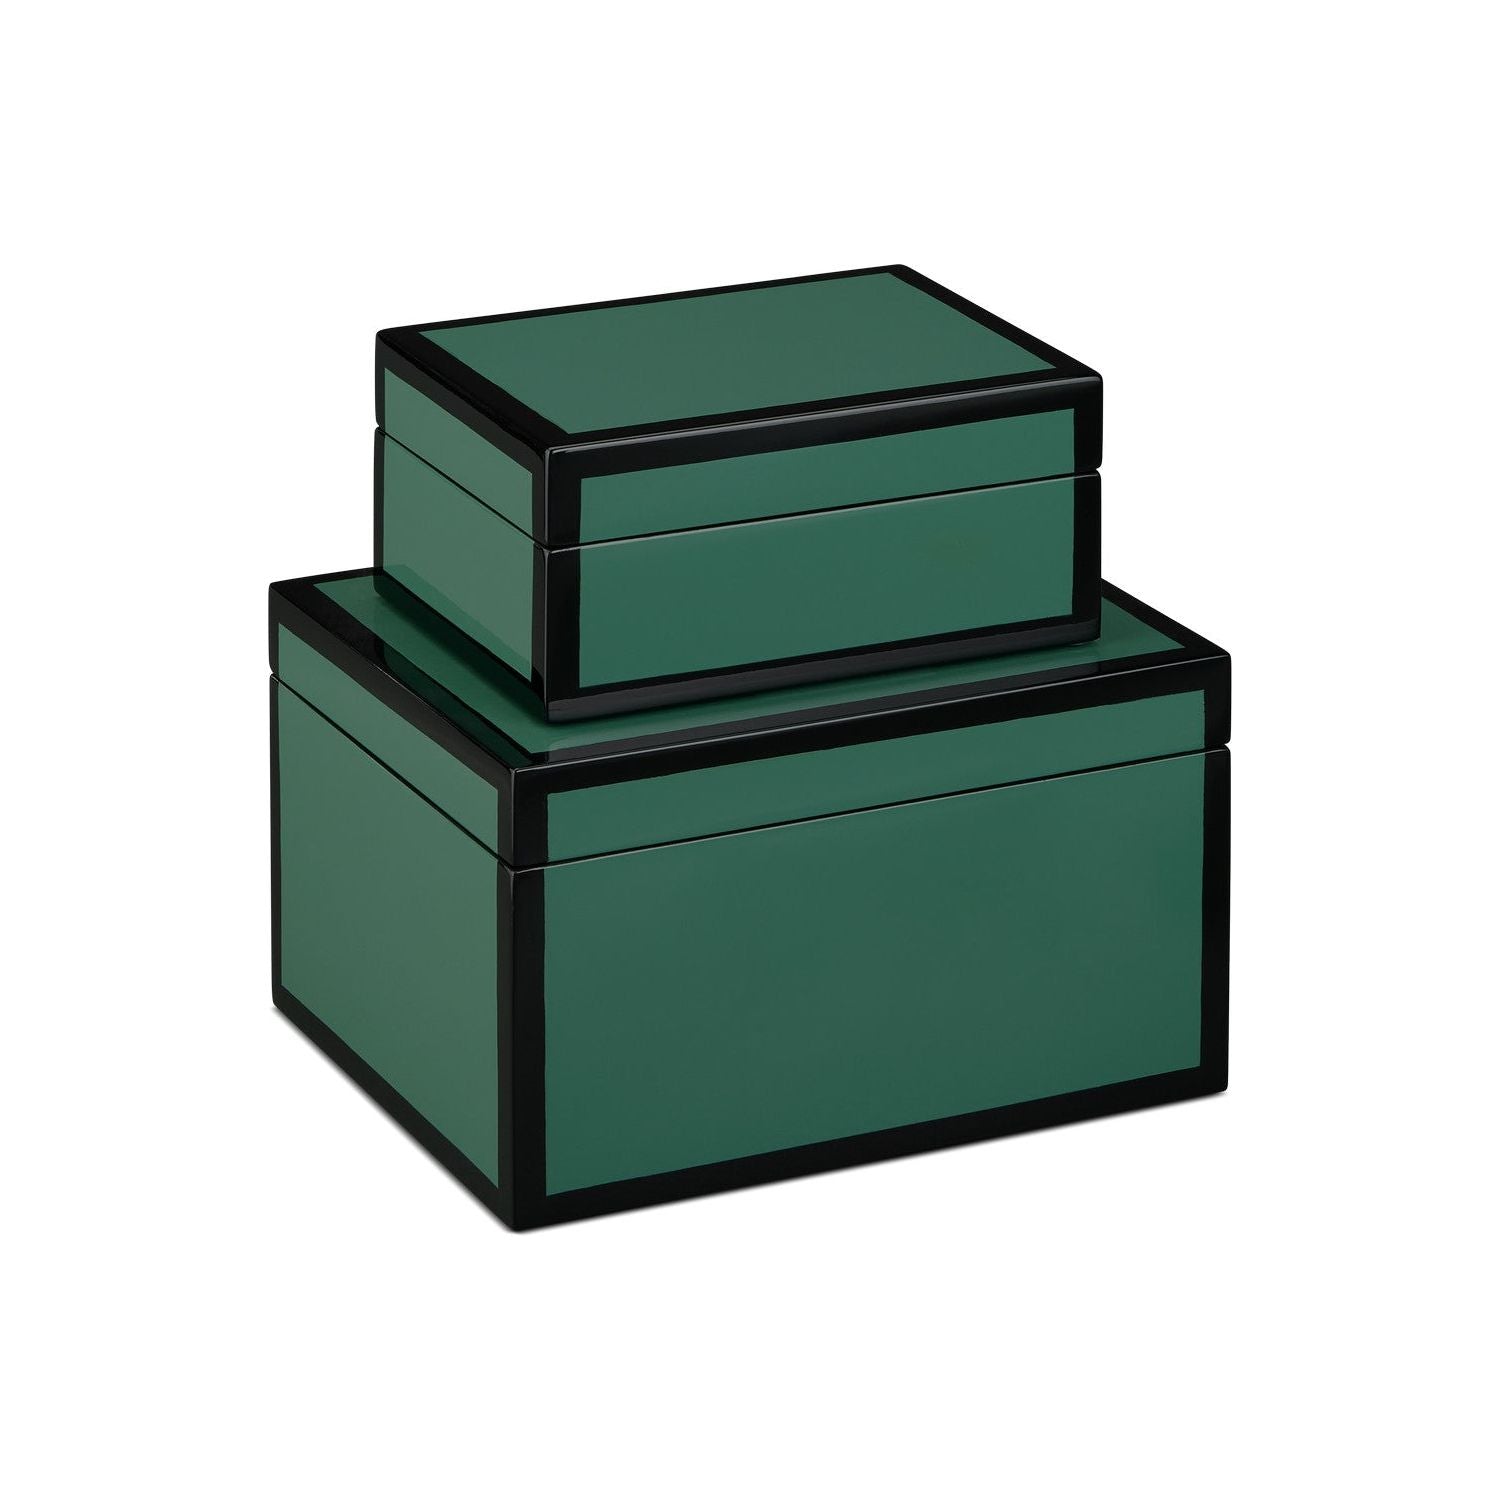 Currey and Company - 1200-0906 - Box Set of 2 - Green/Black